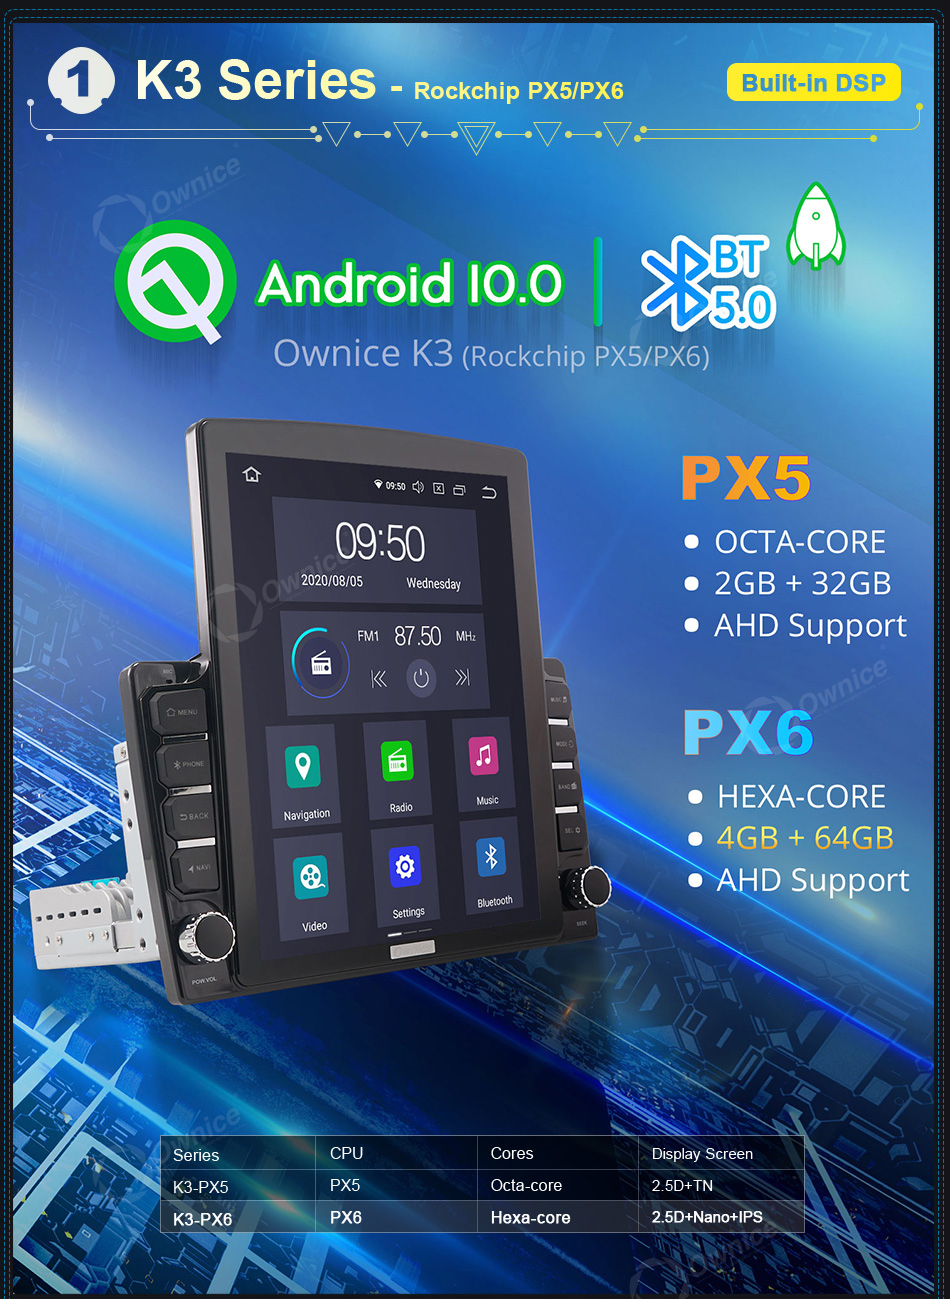 Ownice Octa 8 Core Android 10.0 Car Radio forHyundai Santafe 2018 - 2019 Multimedia Video Audio GPS Player head Unit 4G LTE